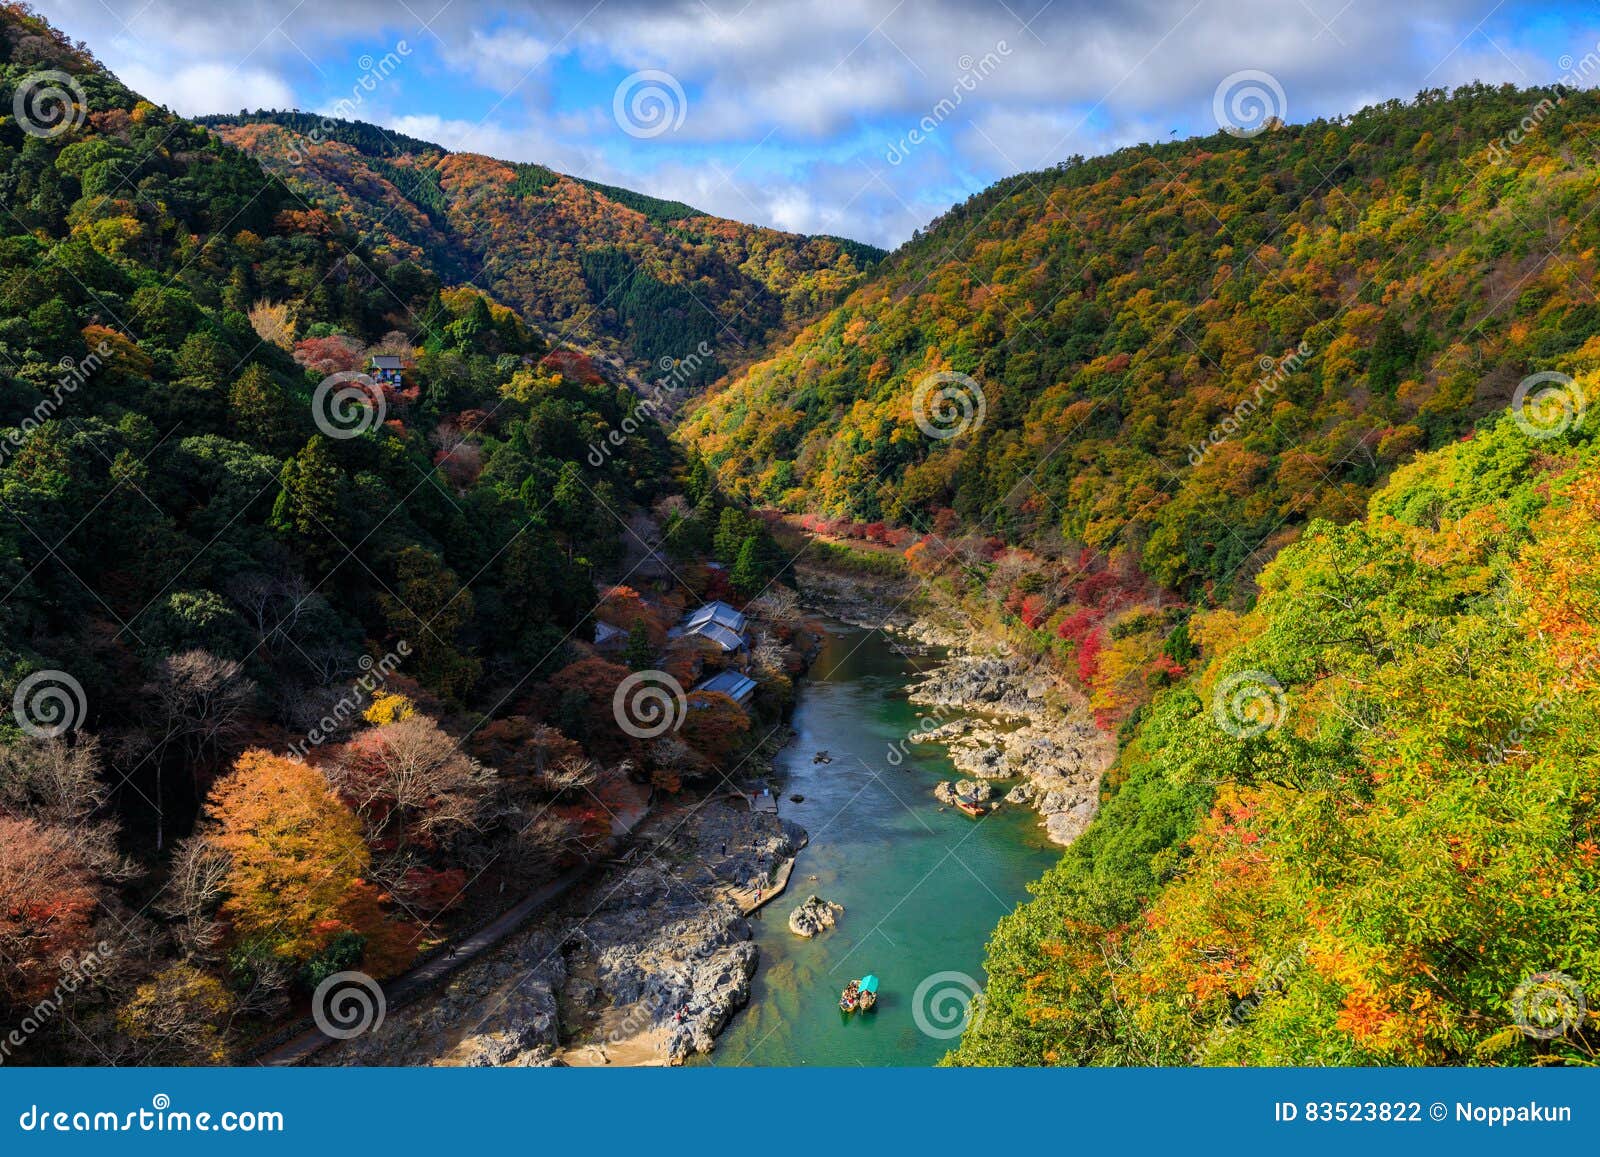 hozu river in autumn view from arashiyama view point, kyoto,